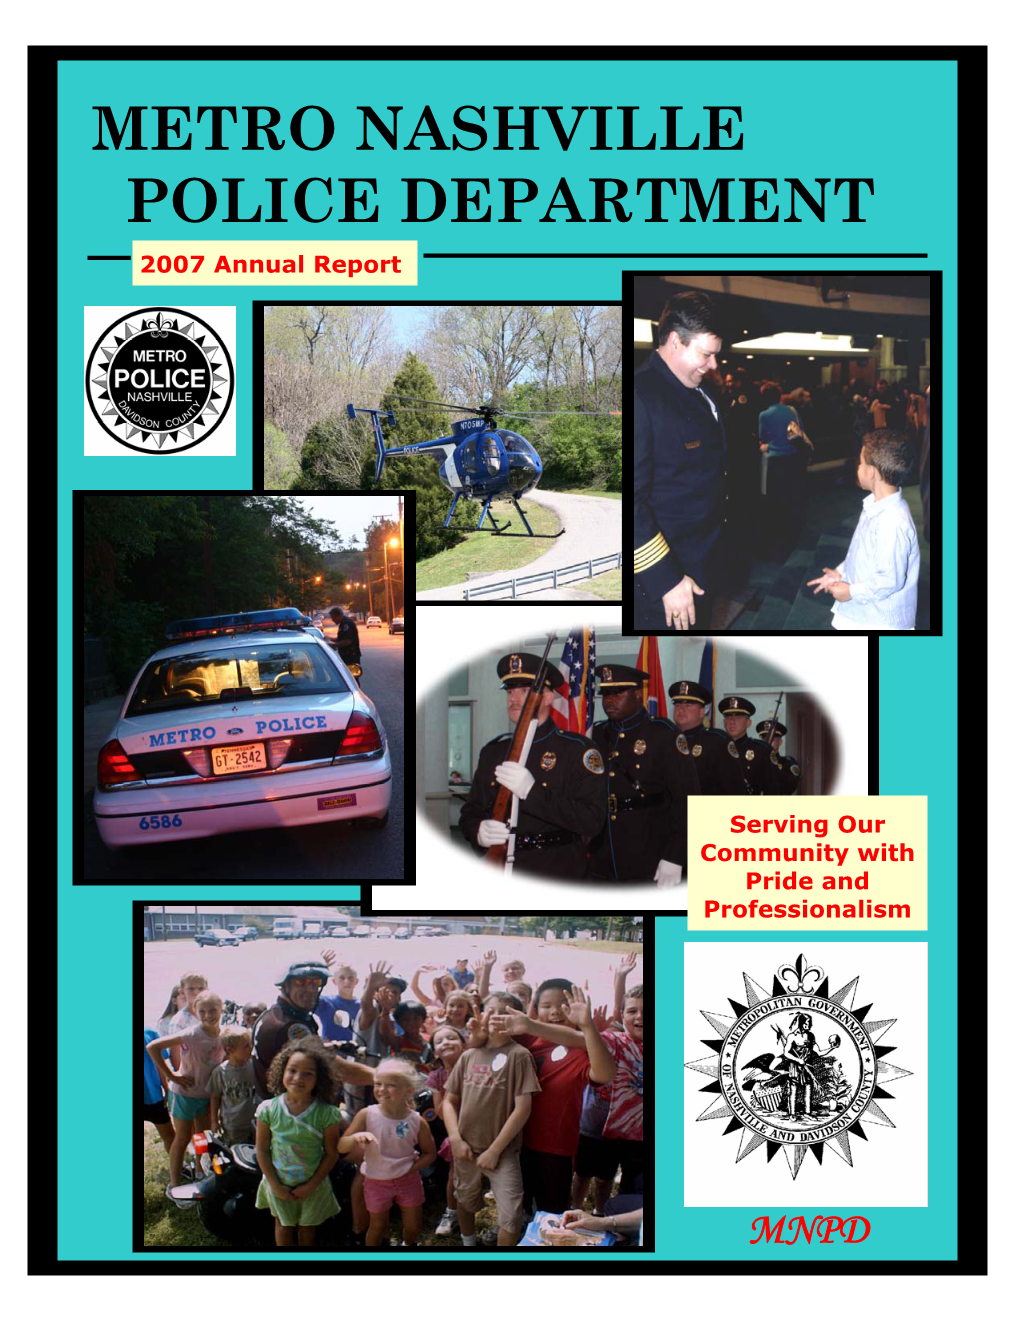 Metro Nashville Police Department 2007 Annual Report